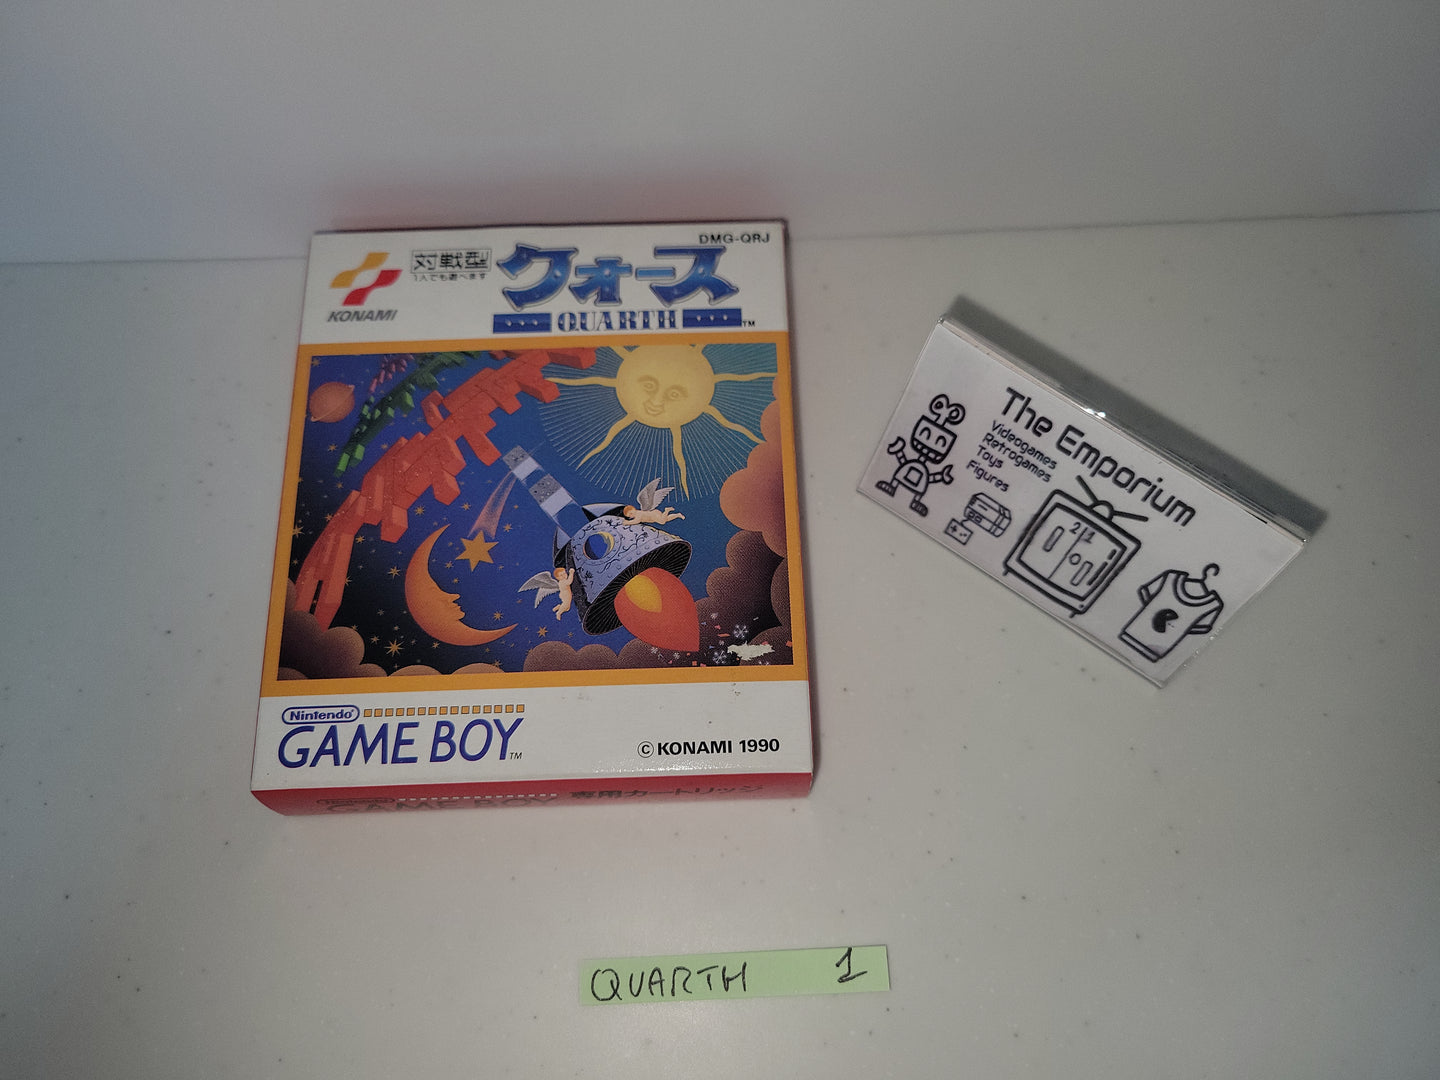 Quarth - Nintendo GB GameBoy